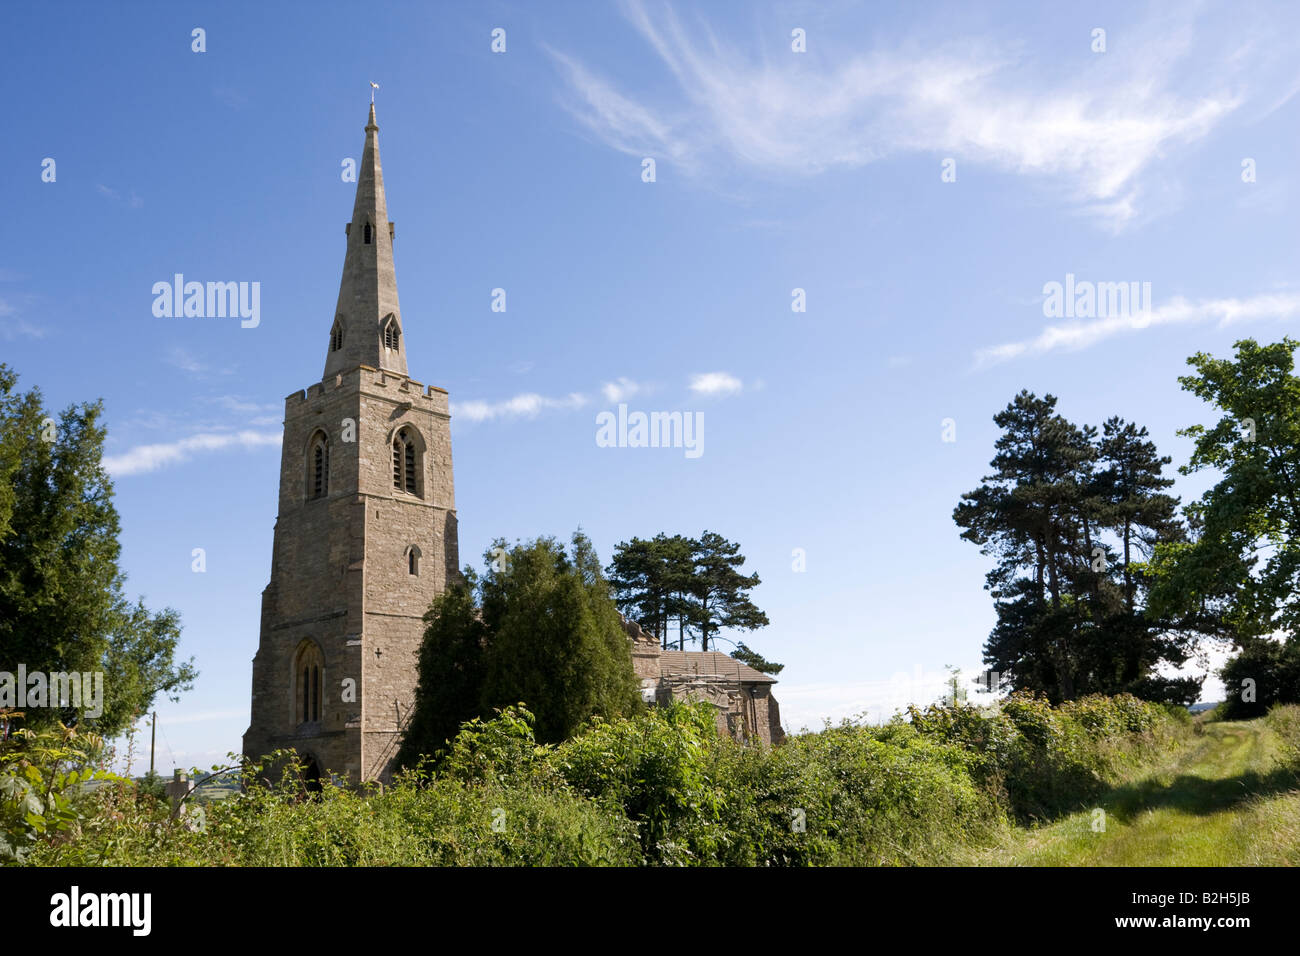 All Saints Church, Little Staughton, Bedfordshire Stock Photo